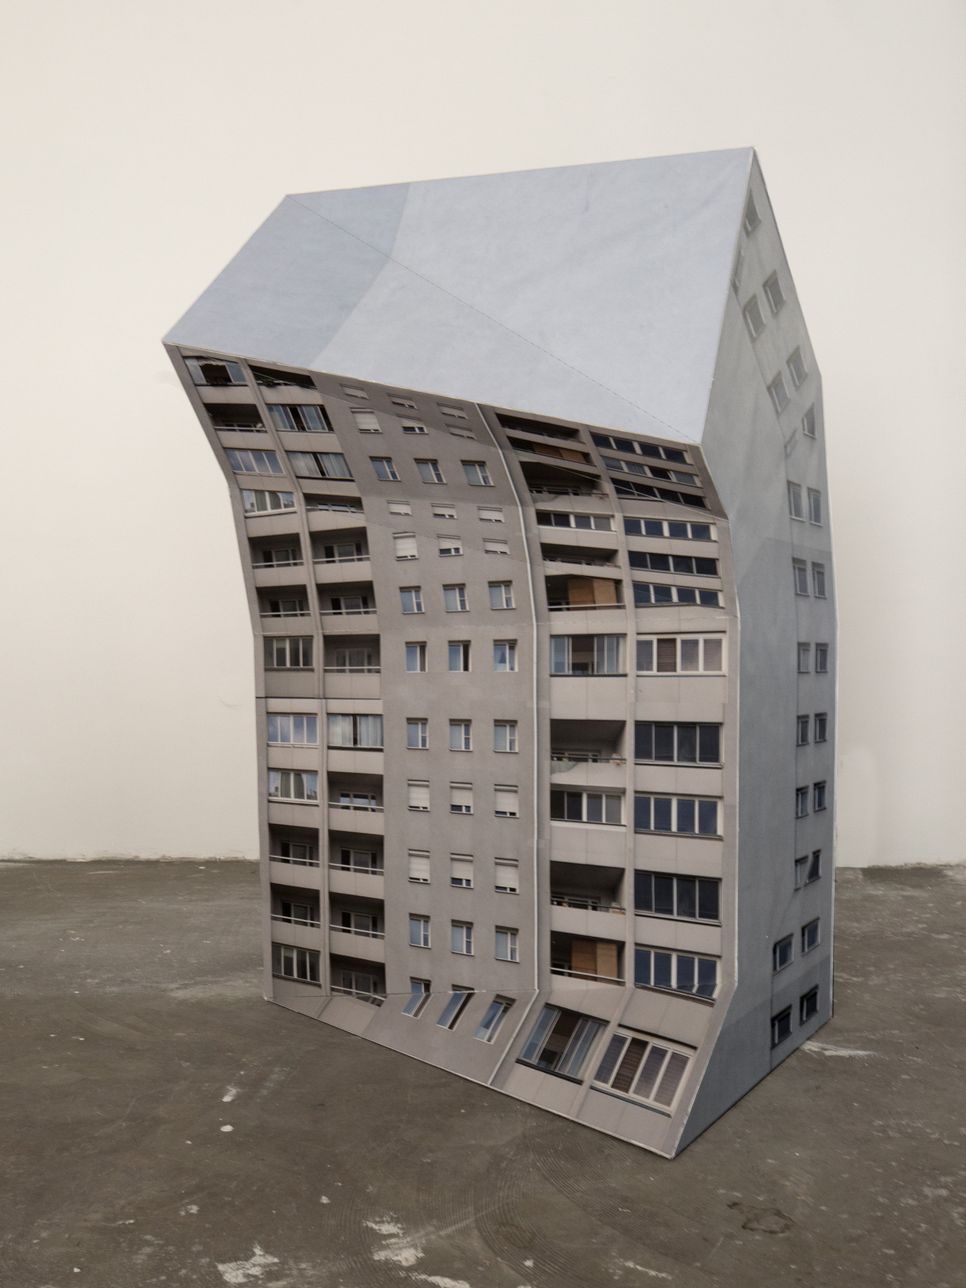 Bernd Oppl crooked building_2015_Holz_Pigmentprint_Buettenpapier_40_135_70cm_small